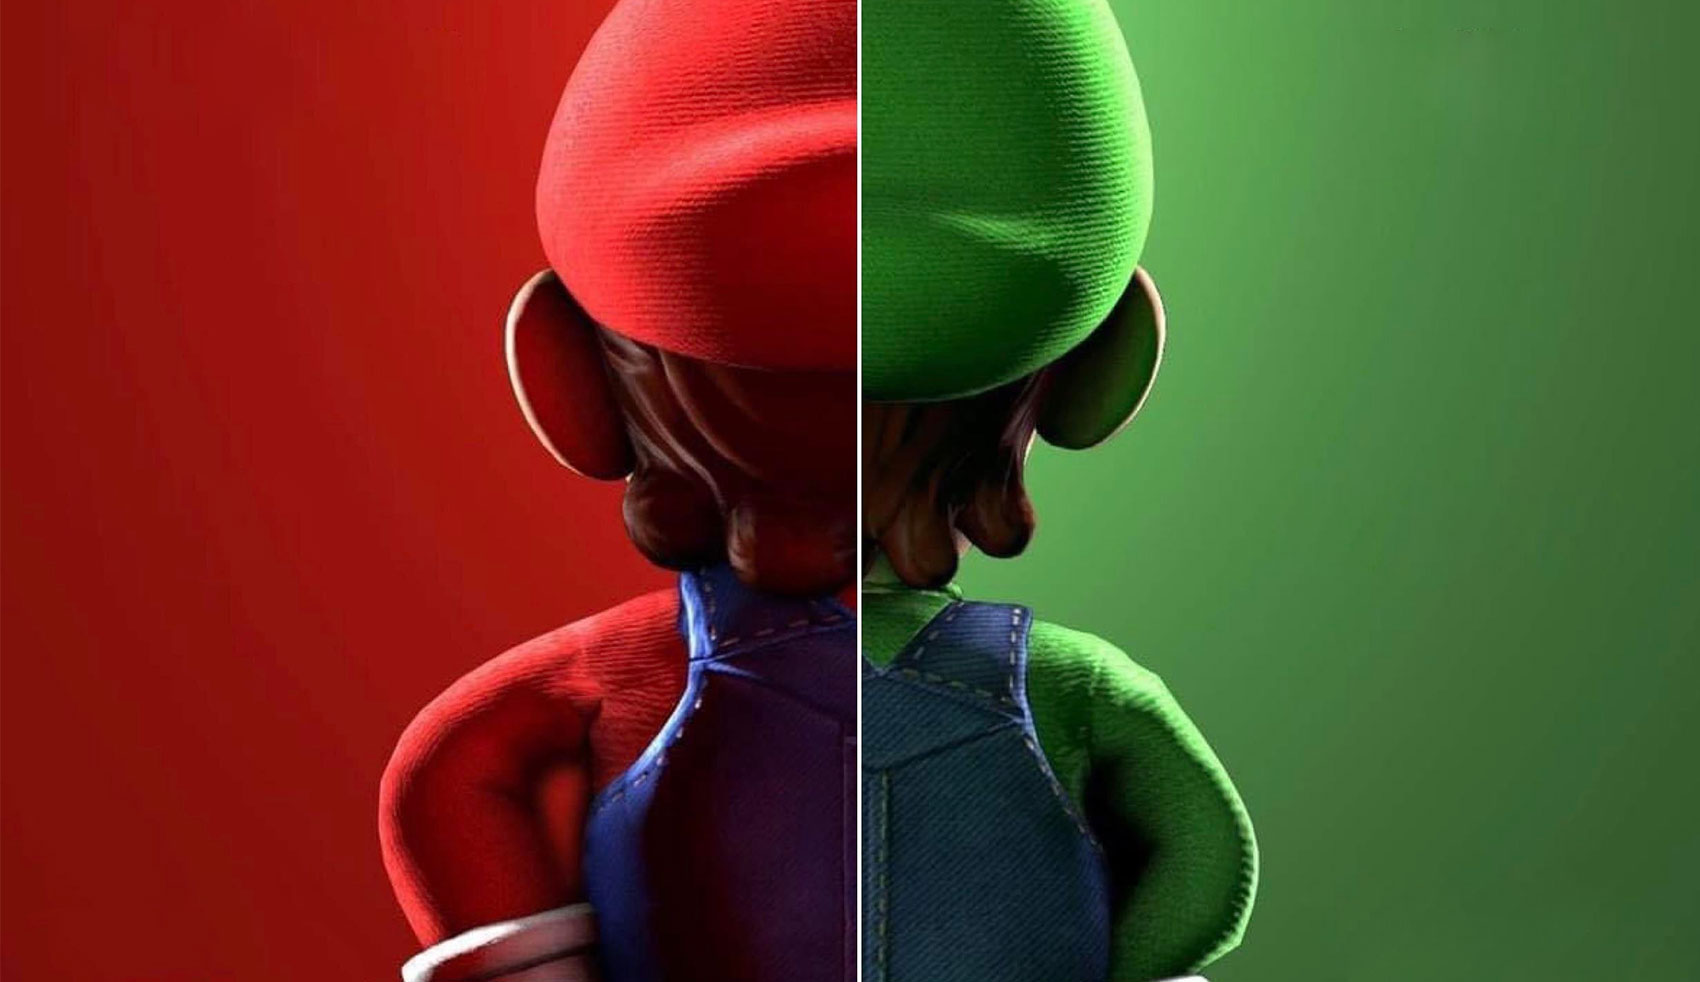 uper Mario Bros promotional image